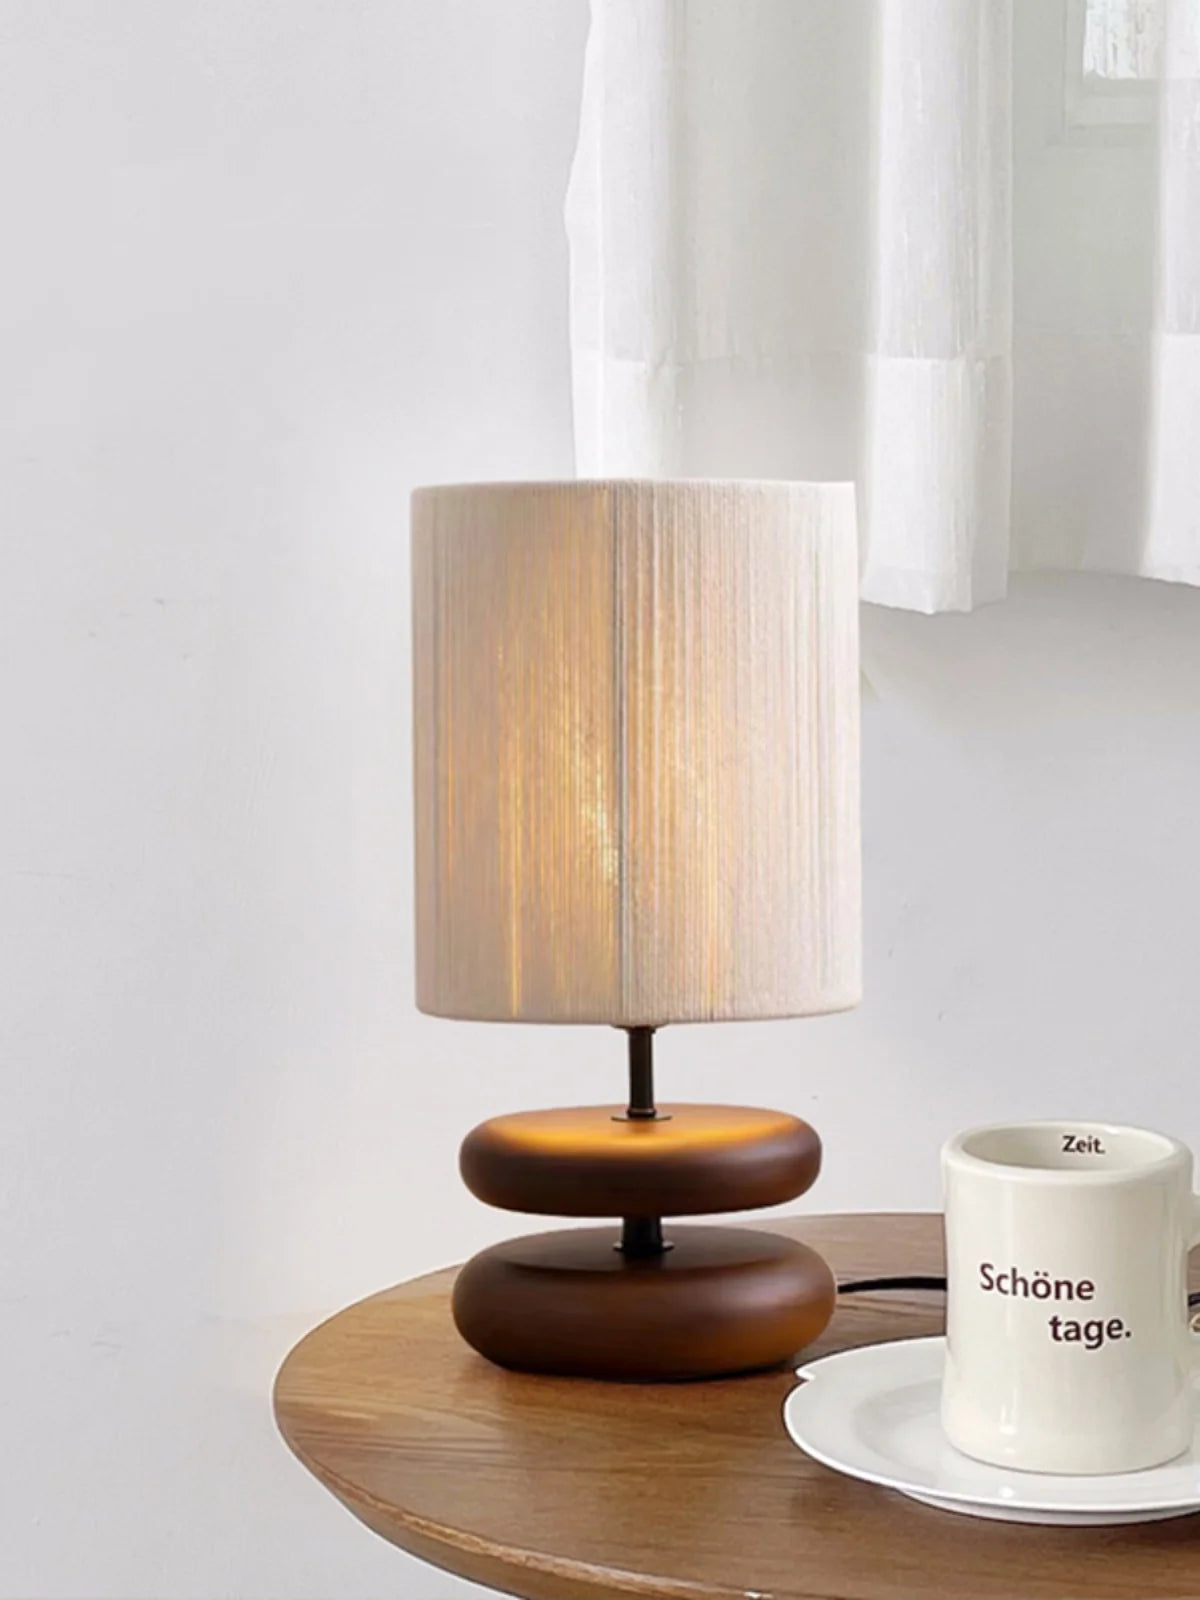 Silent Wind Solid Wood Table Lamp Designer Creative Walnut Color Living Room, Study, Bedroom, Bedhead, Japanese Atmosphere Tab